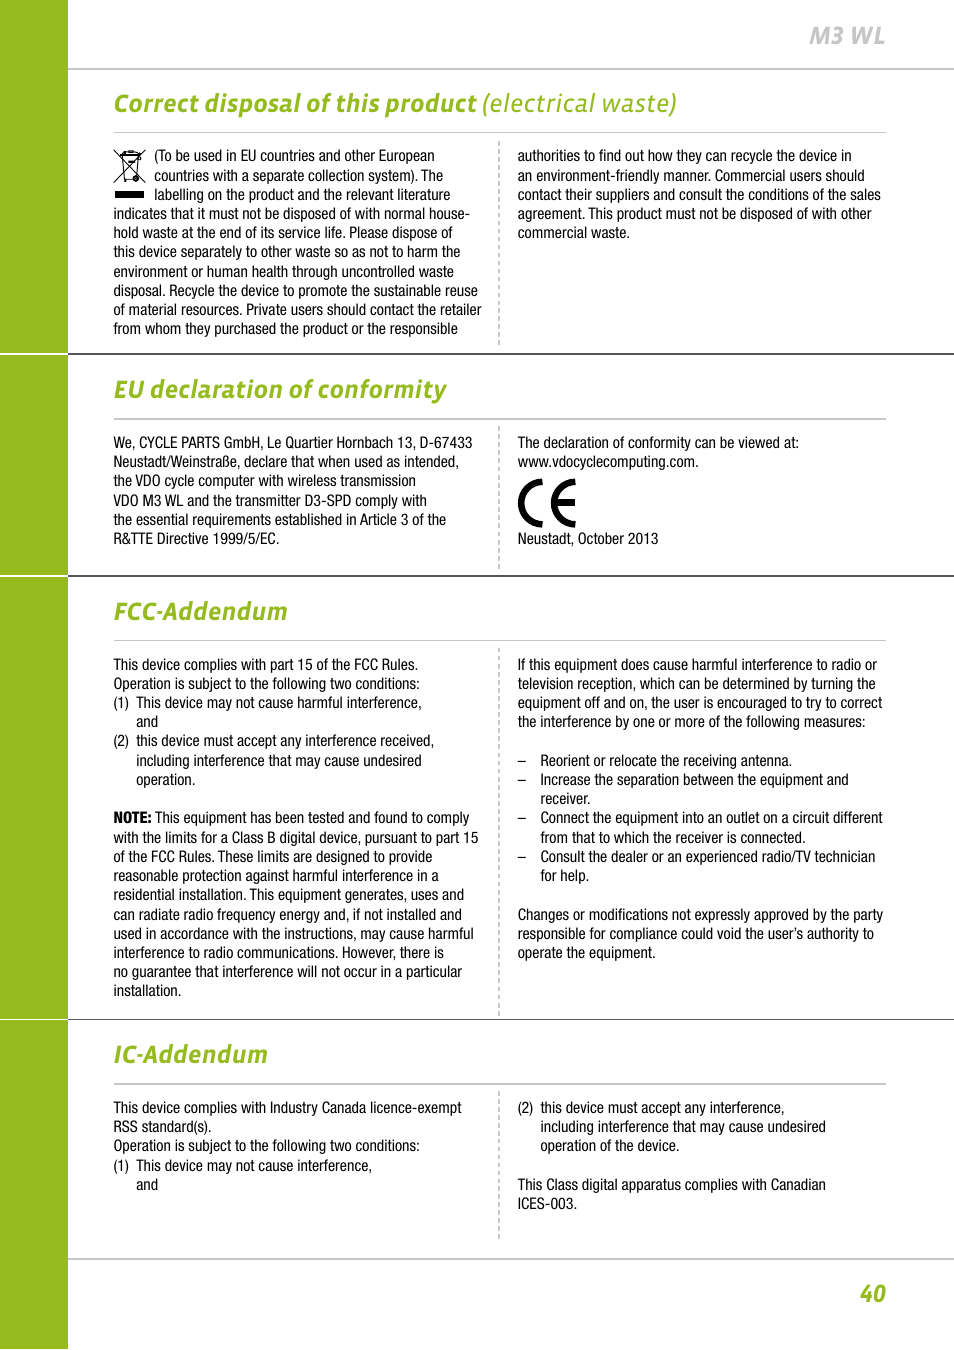 Fcc-addendum ic-addendum | VDO M3WL User Manual | Page 40 / 41